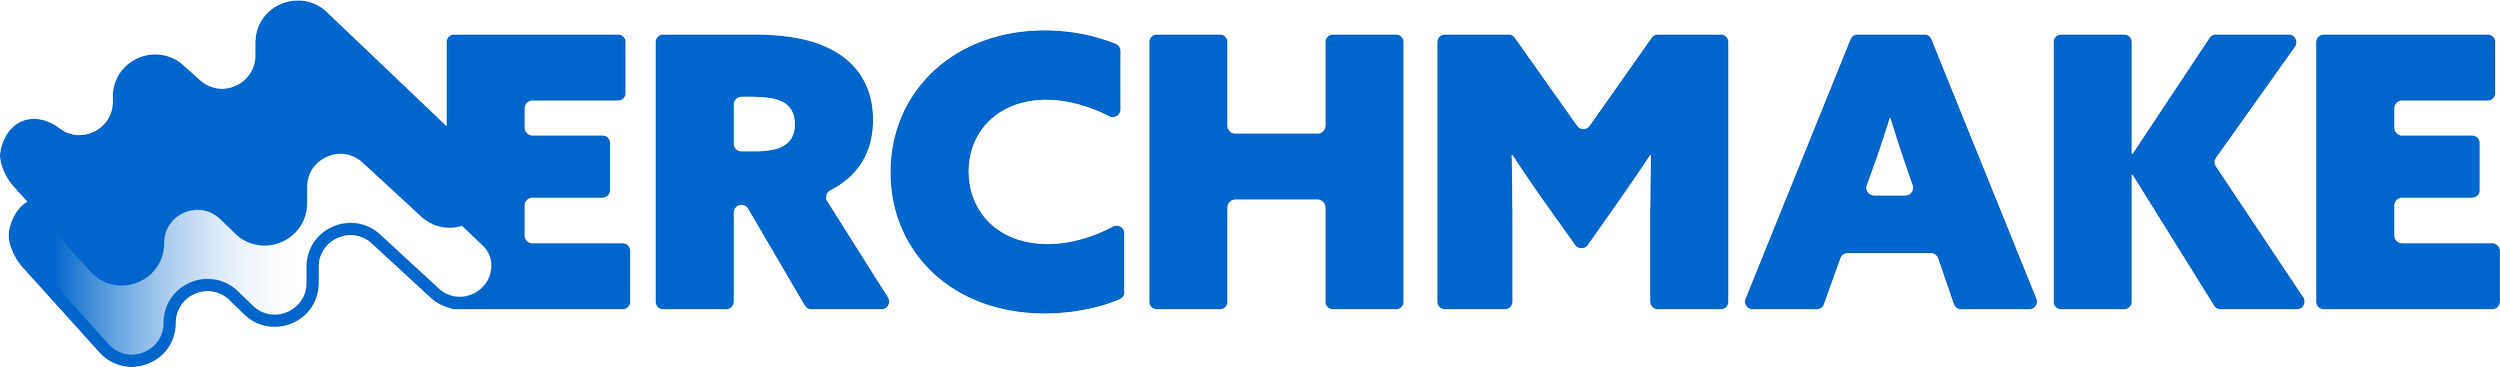 Merchmake logo blue2.png